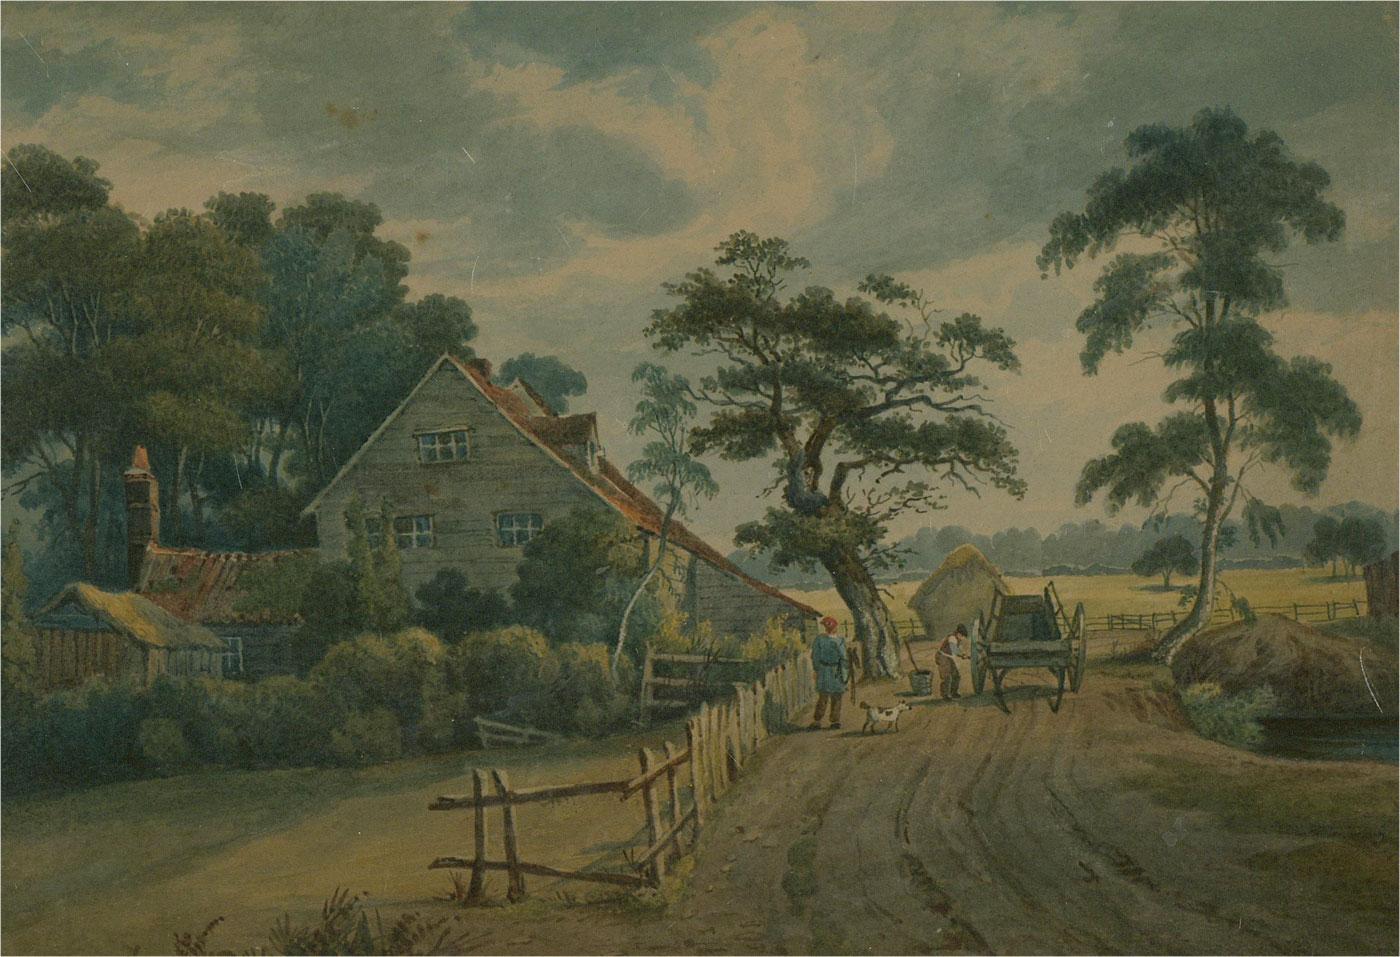 Unknown Landscape Art - 1834 Watercolour - At Kilburn, Middlesex